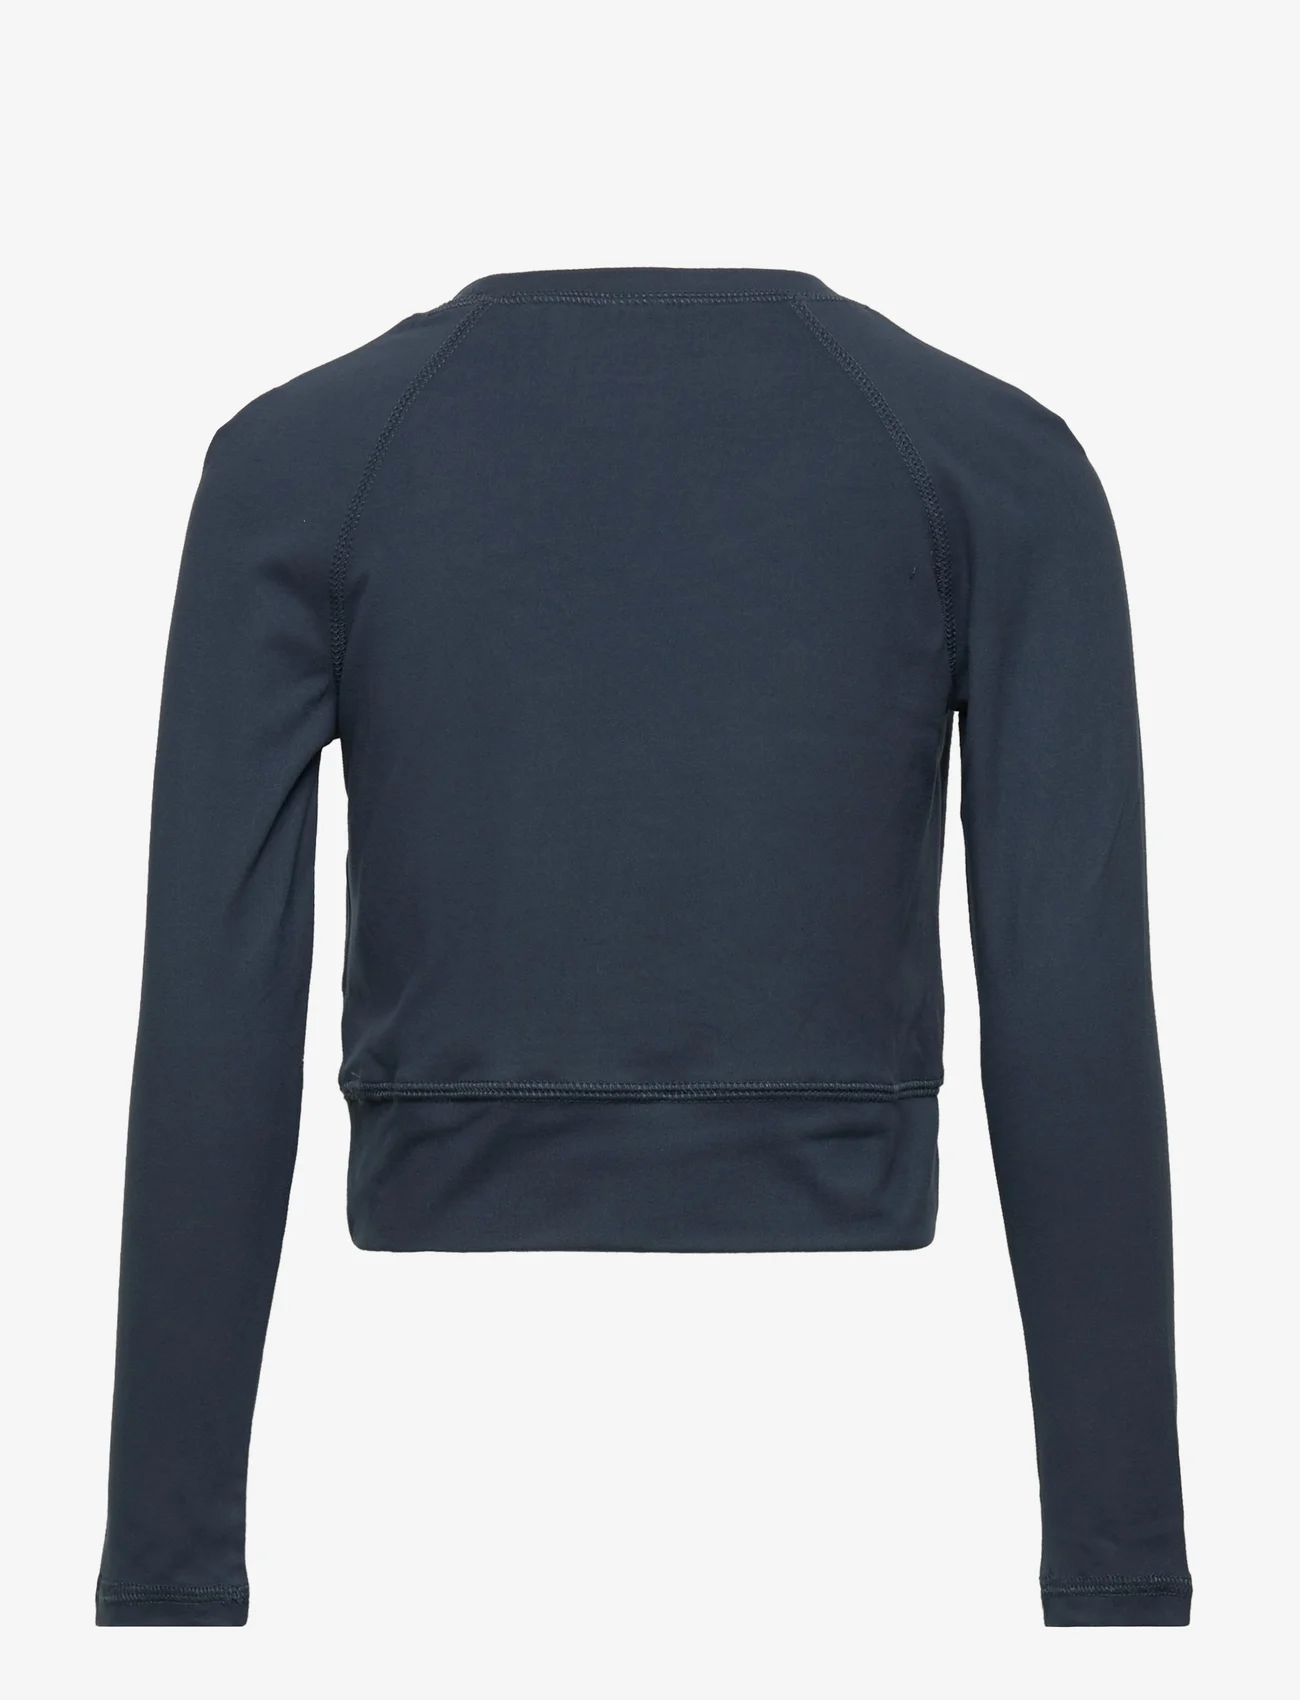 Lindex - Top active wear cropped - langærmede t-shirts - dk turquoise - 1